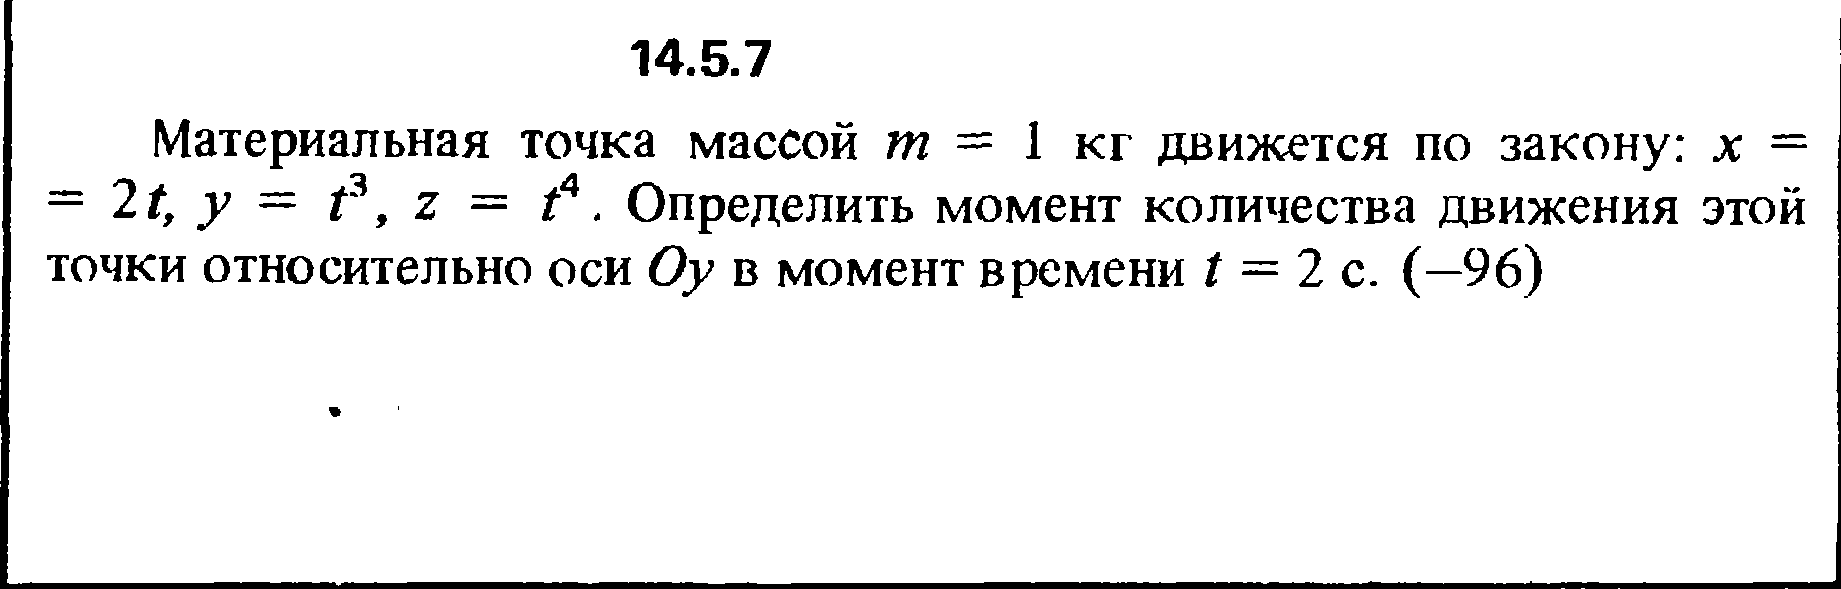 Решение задачи 14.5.7 из сборника Кепе О.Е. 1989 года